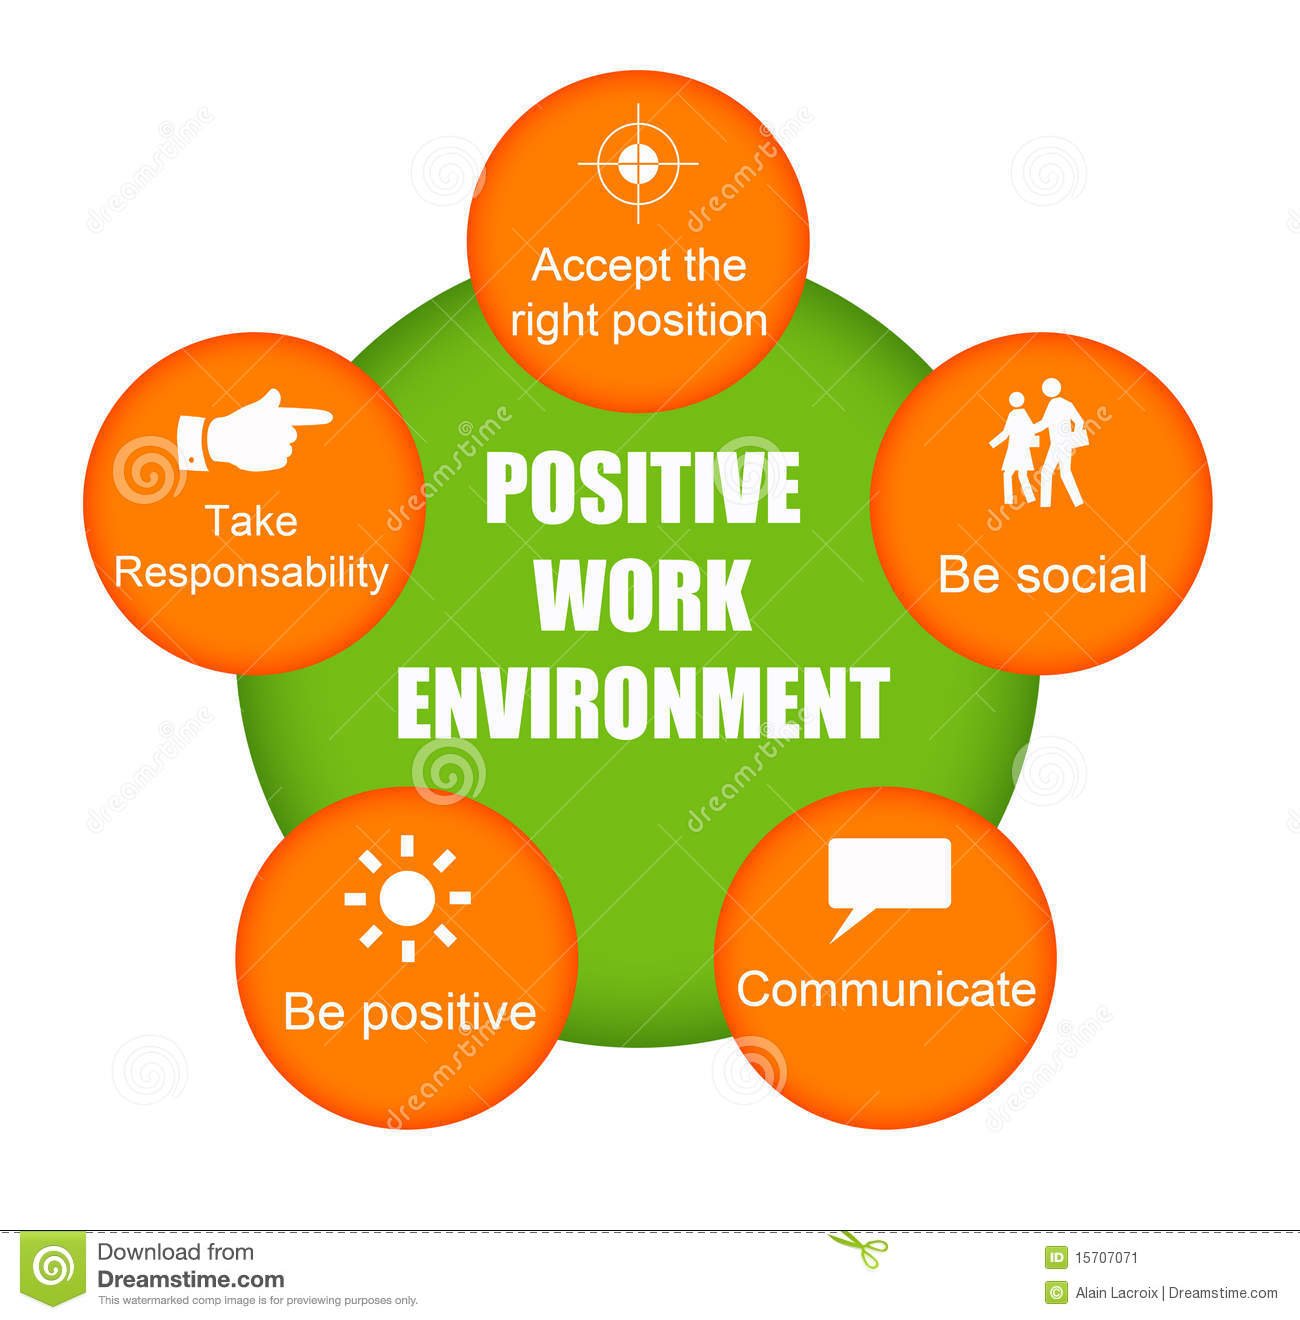 Creating a Positive Work Environment